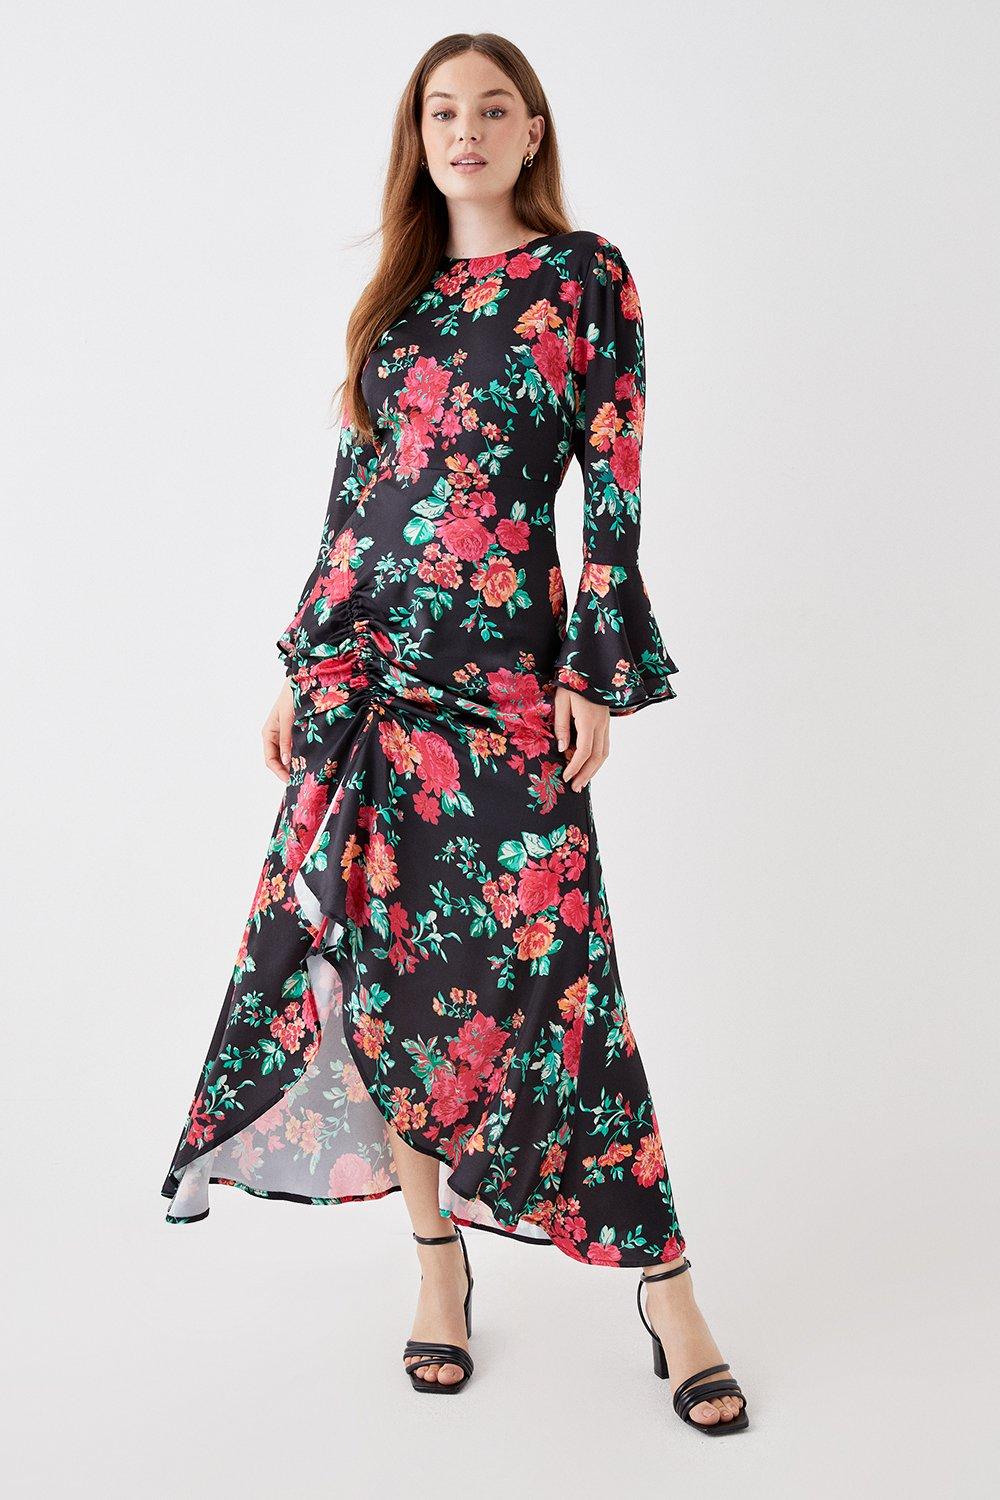 Debut London Printed Satin Ruche Side Dress